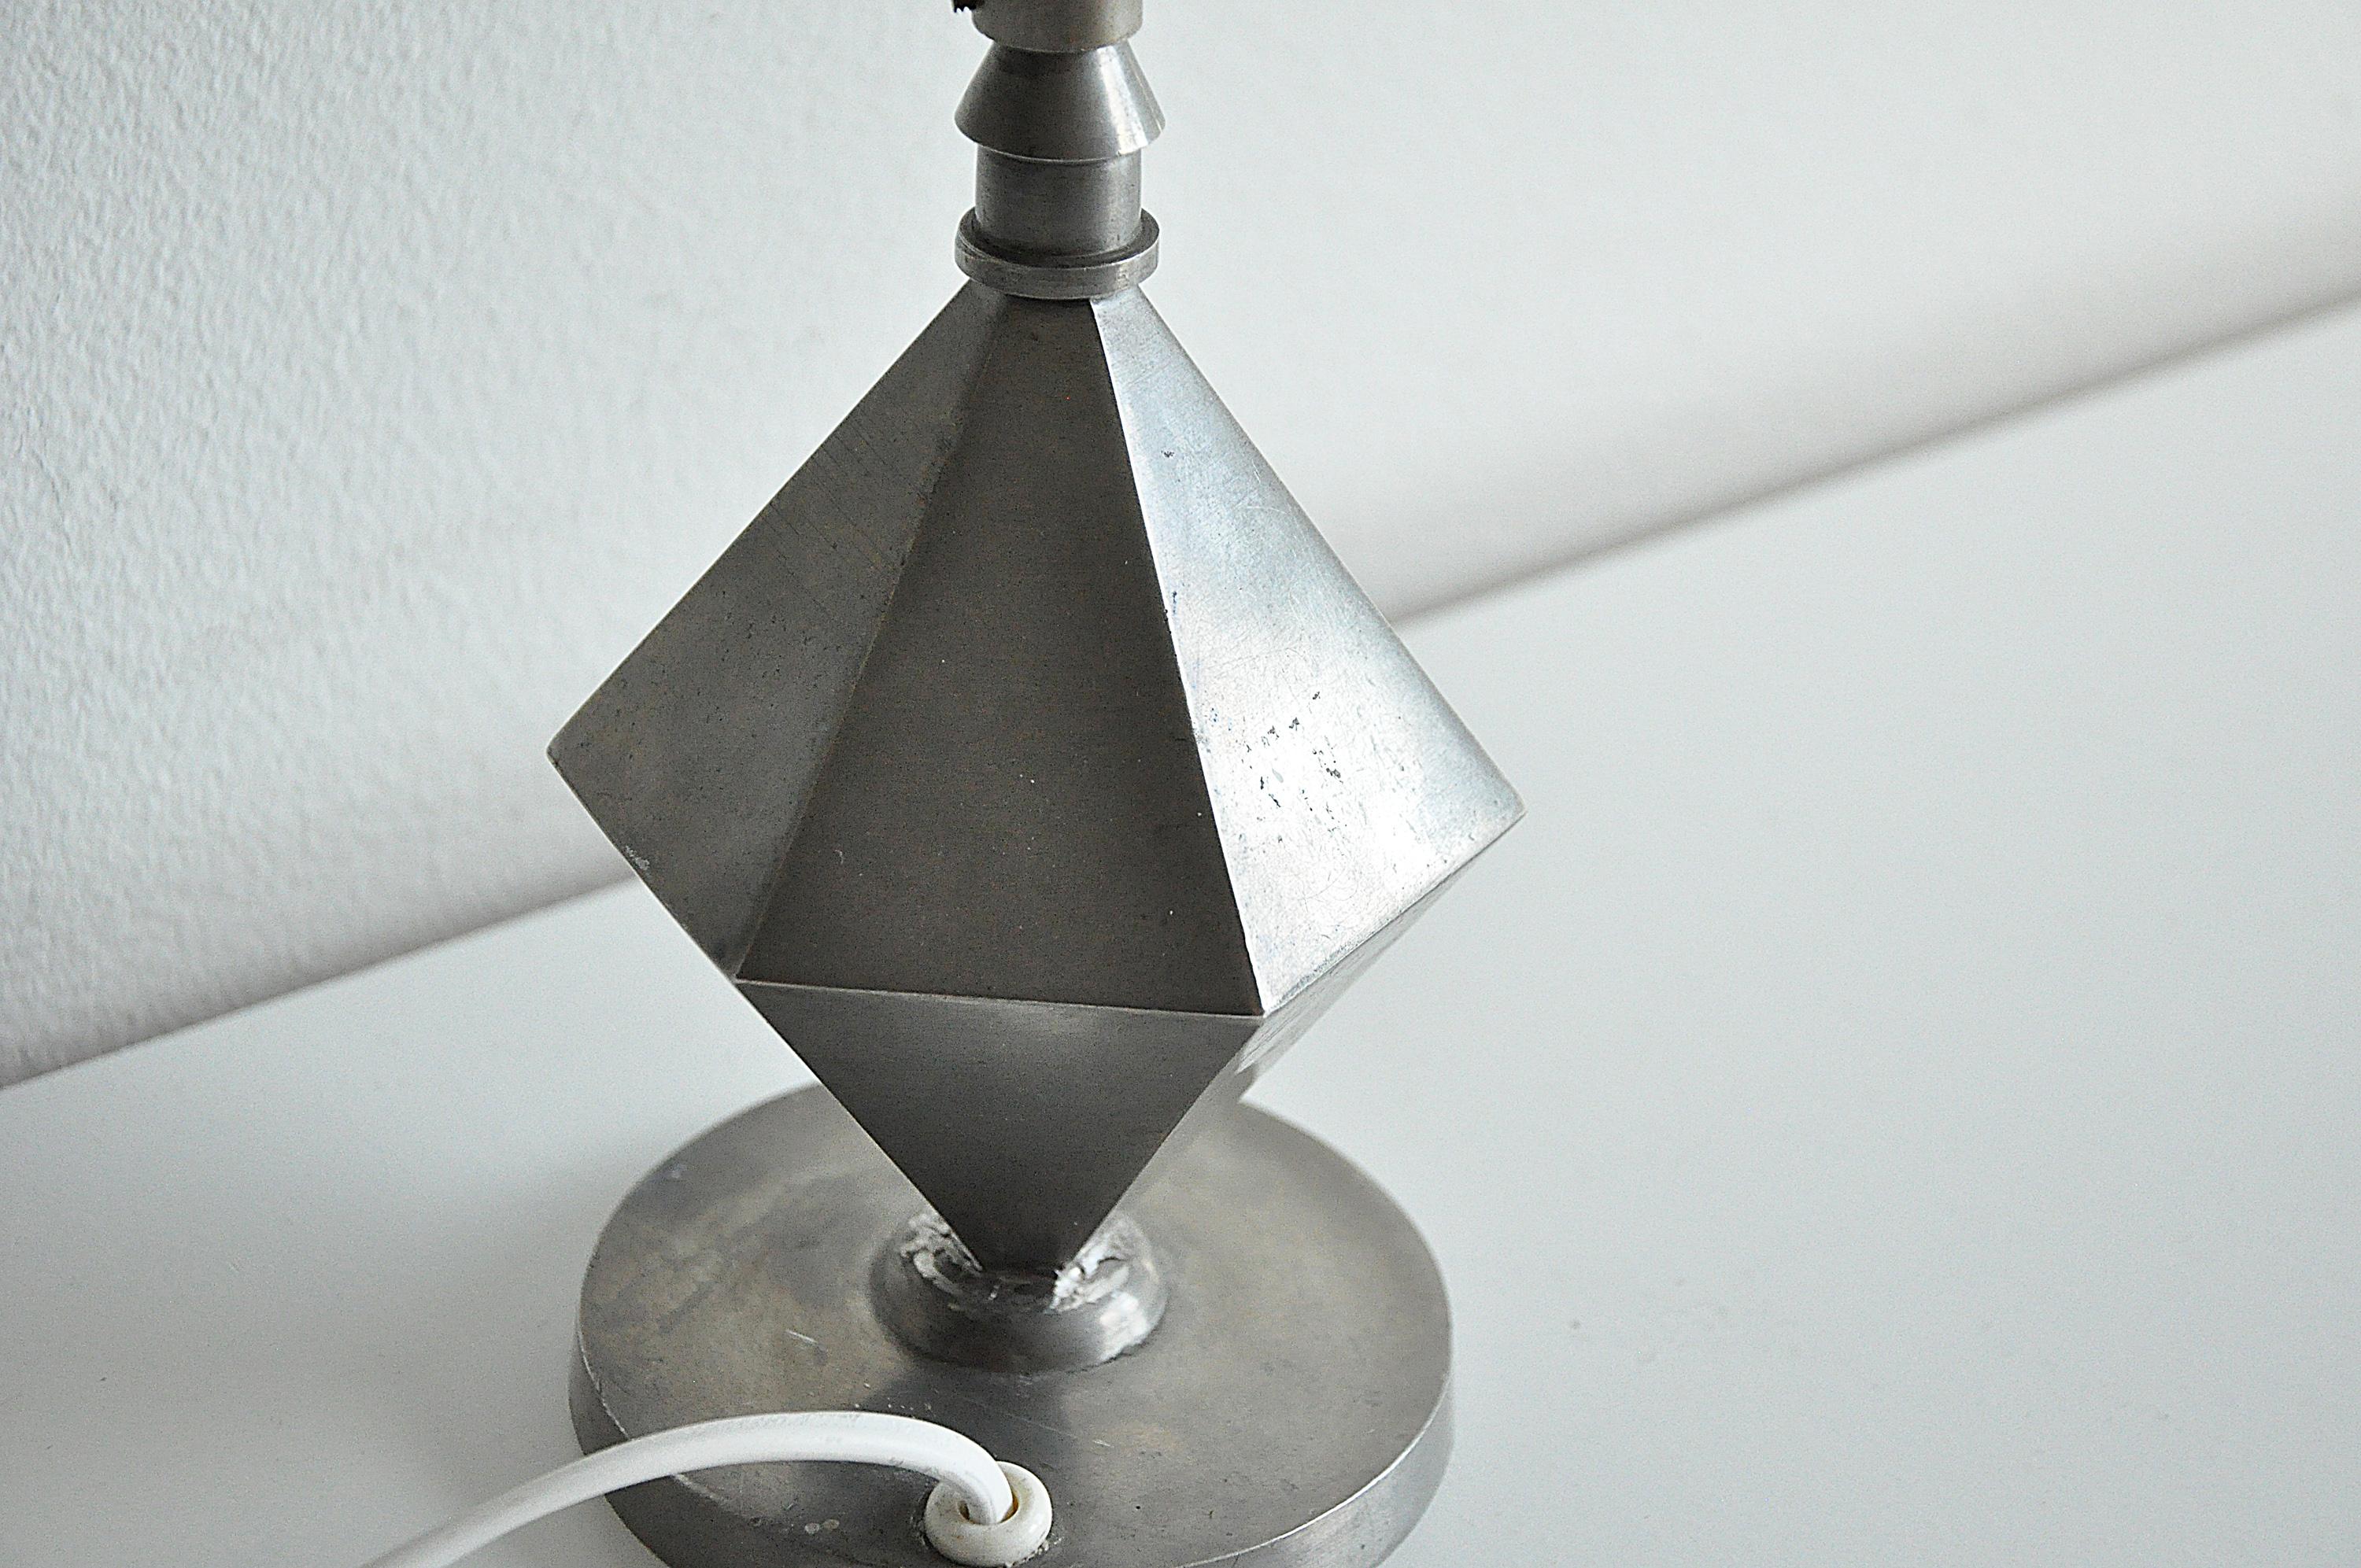 Pewter Table Lamp from Guldsmedsaktiebolaget GAB, 1931 In Fair Condition For Sale In Örebro, SE